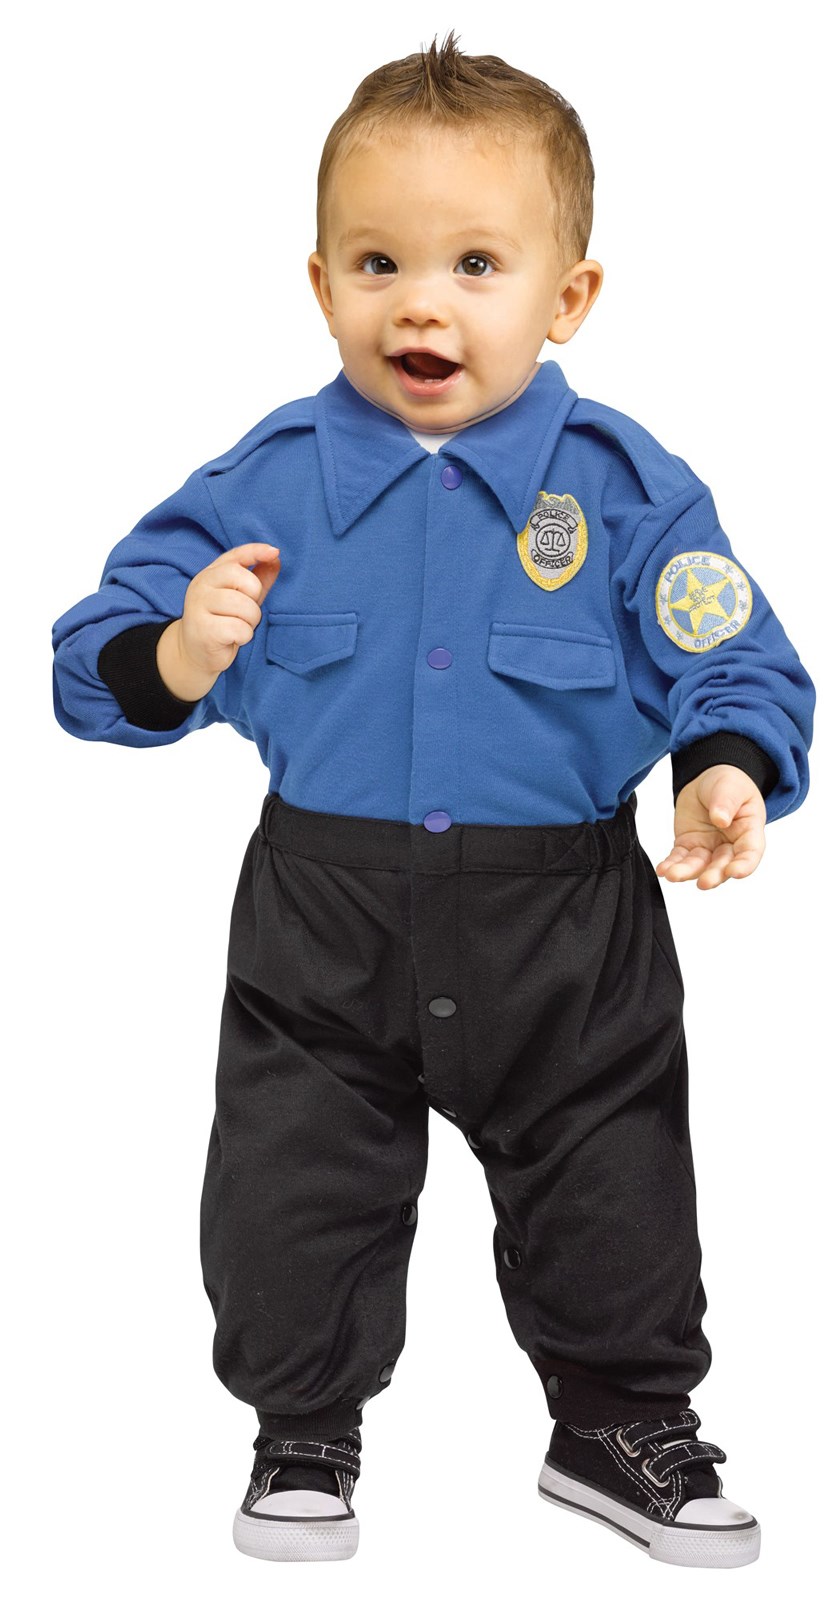 Policeman Costume For Babies